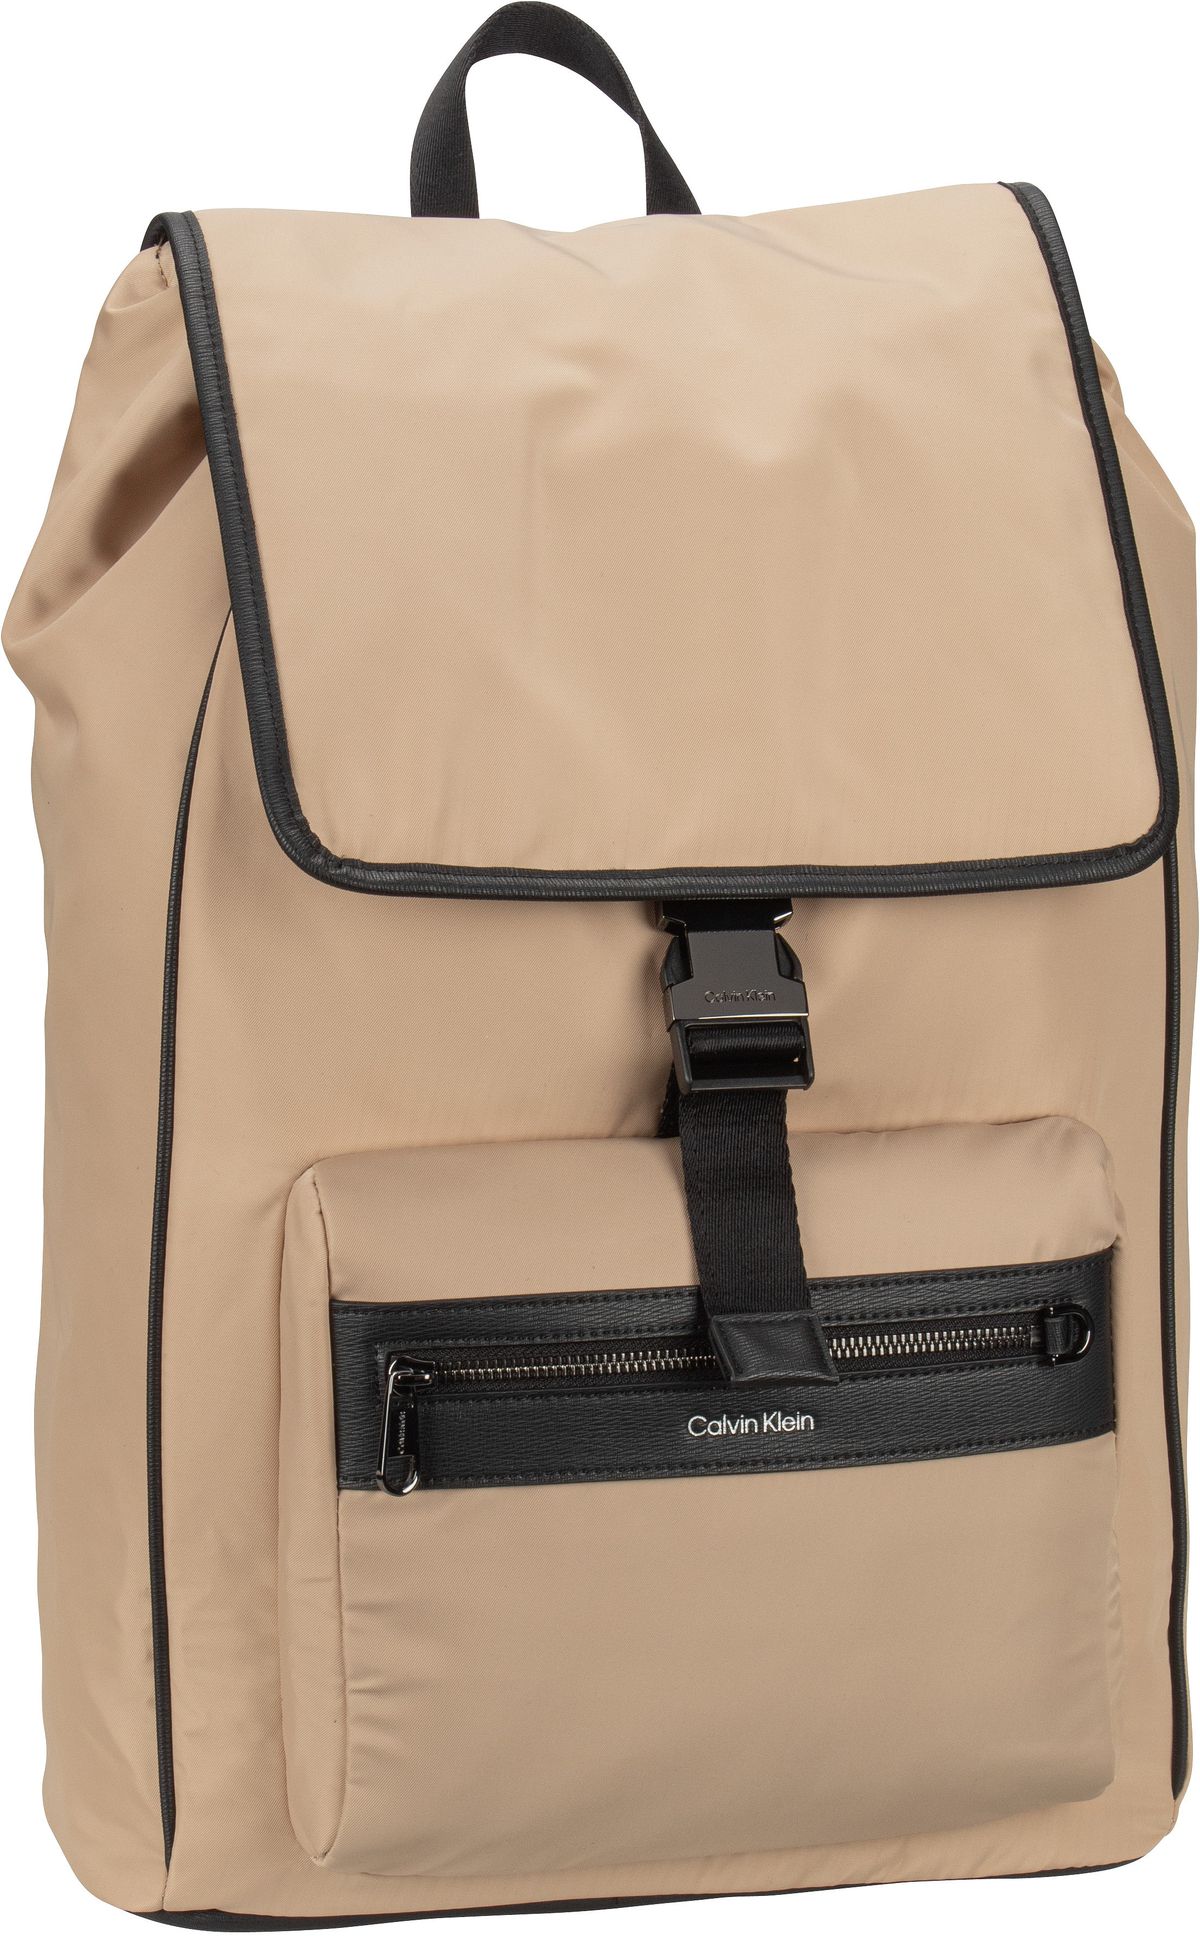 Calvin Klein Calvin Klein CK Elevated Flap Backpack PSP23 in Beige (31.7 Liter), Rucksack / Backpack